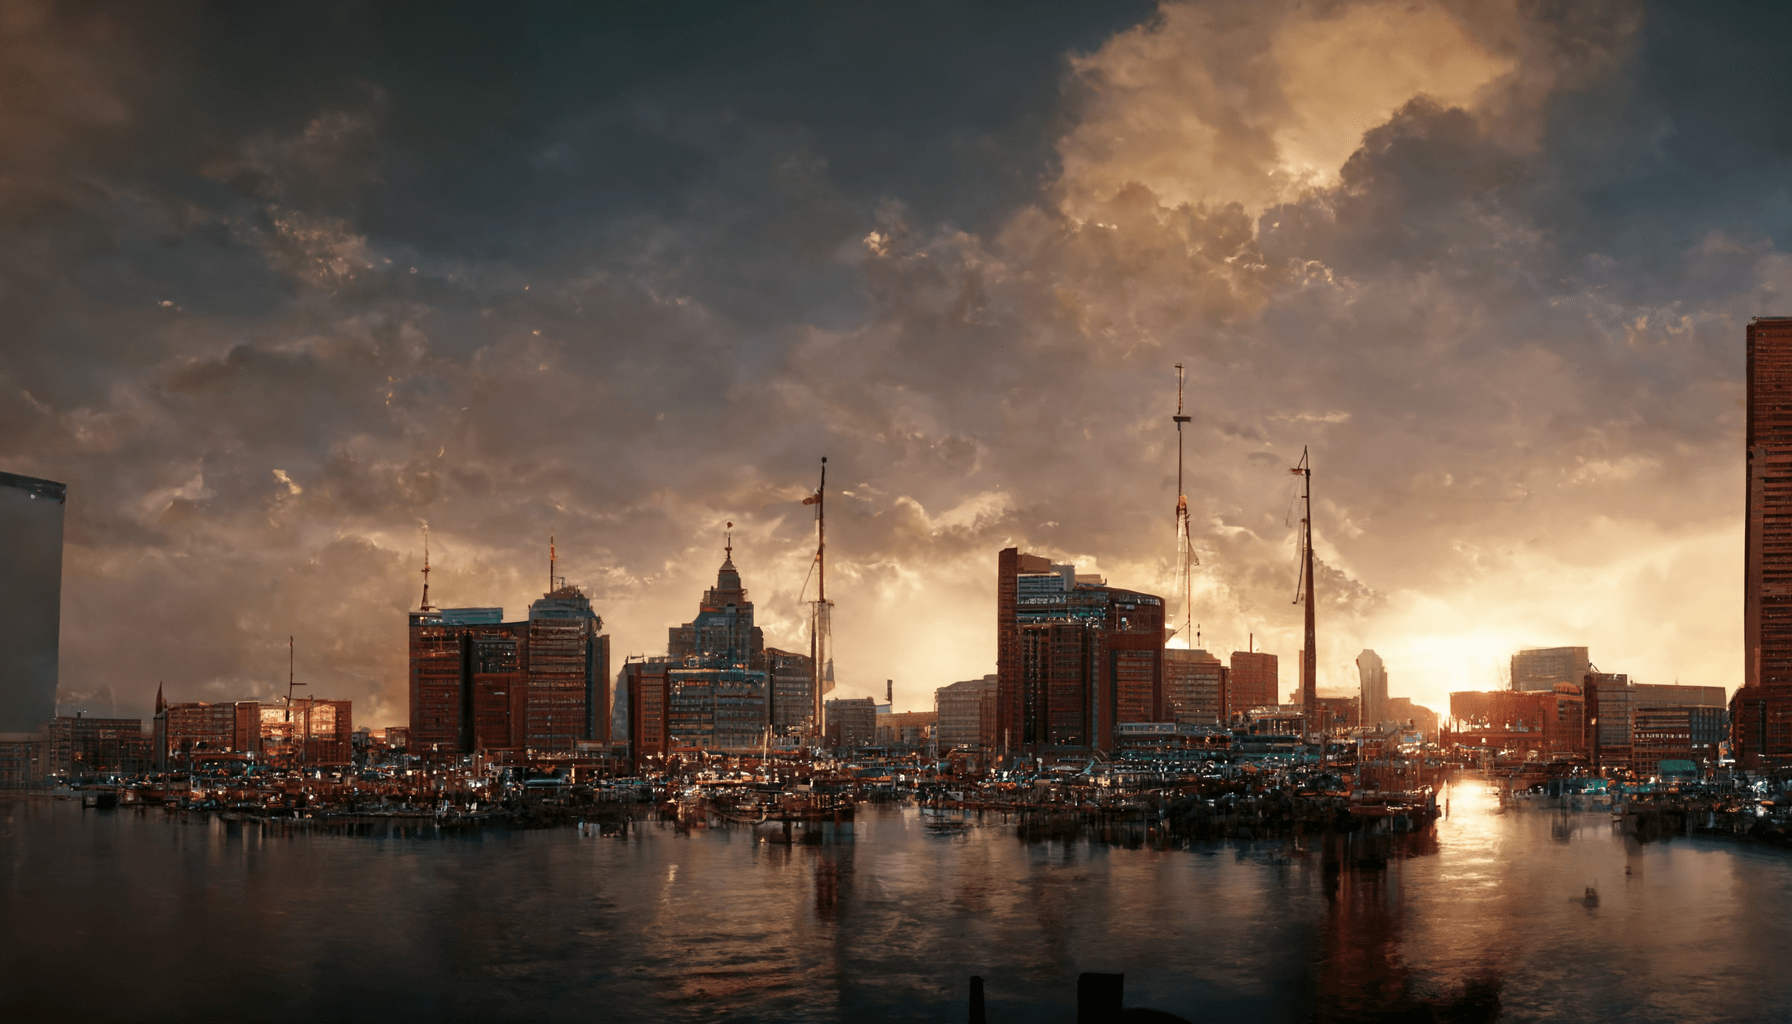 "Baltimore Skyline"